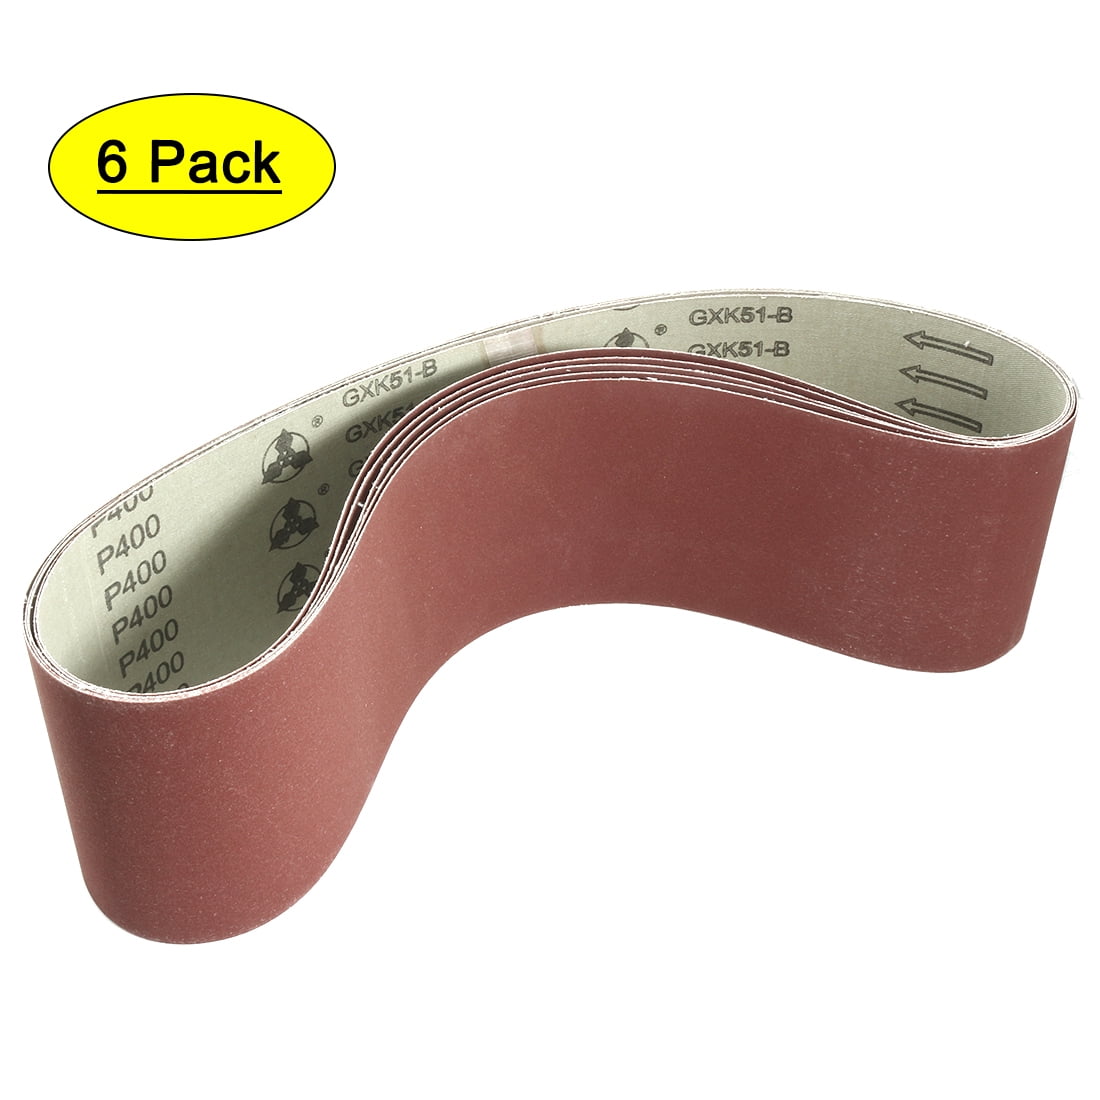 6 Pack 4 X 27 Inch 220 Grit Aluminum Oxide Premium Quality Metal Sanding Belts 